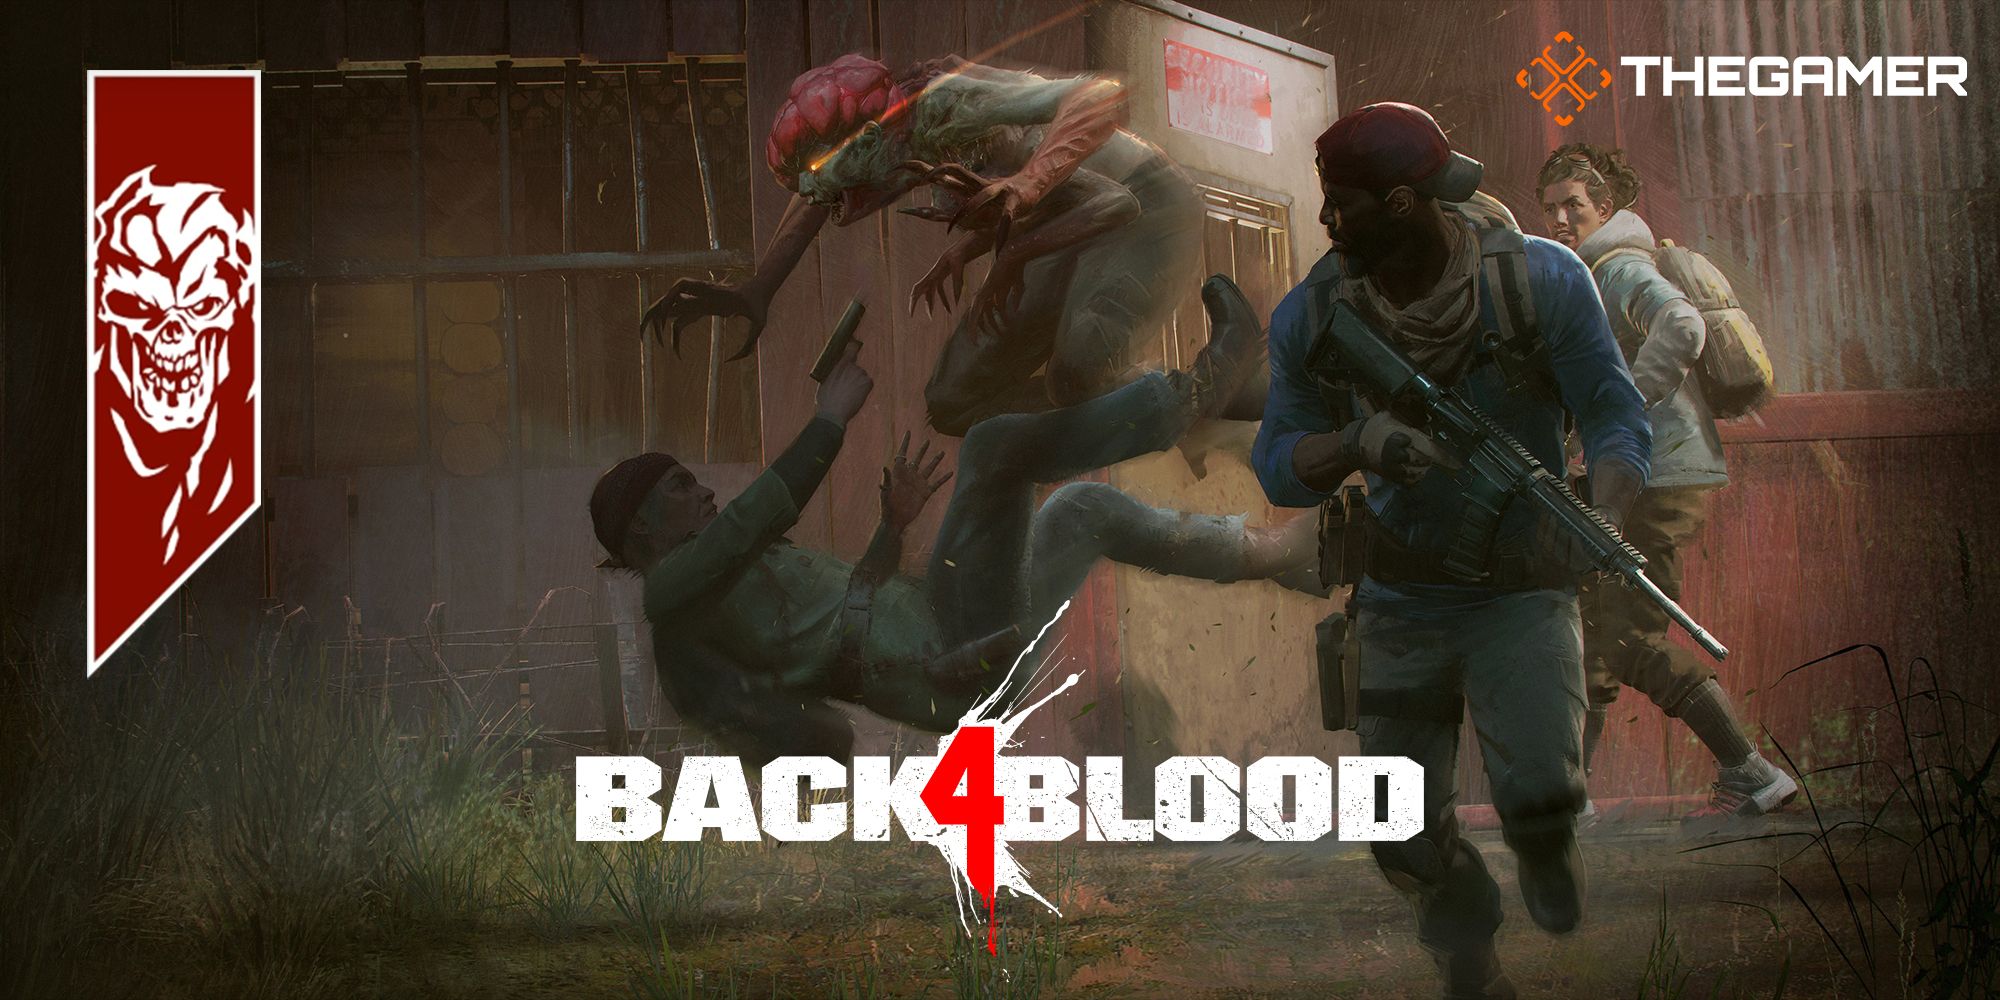 Review: Back 4 Blood Doesn't Quite Capture Left 4 Dead's Magic